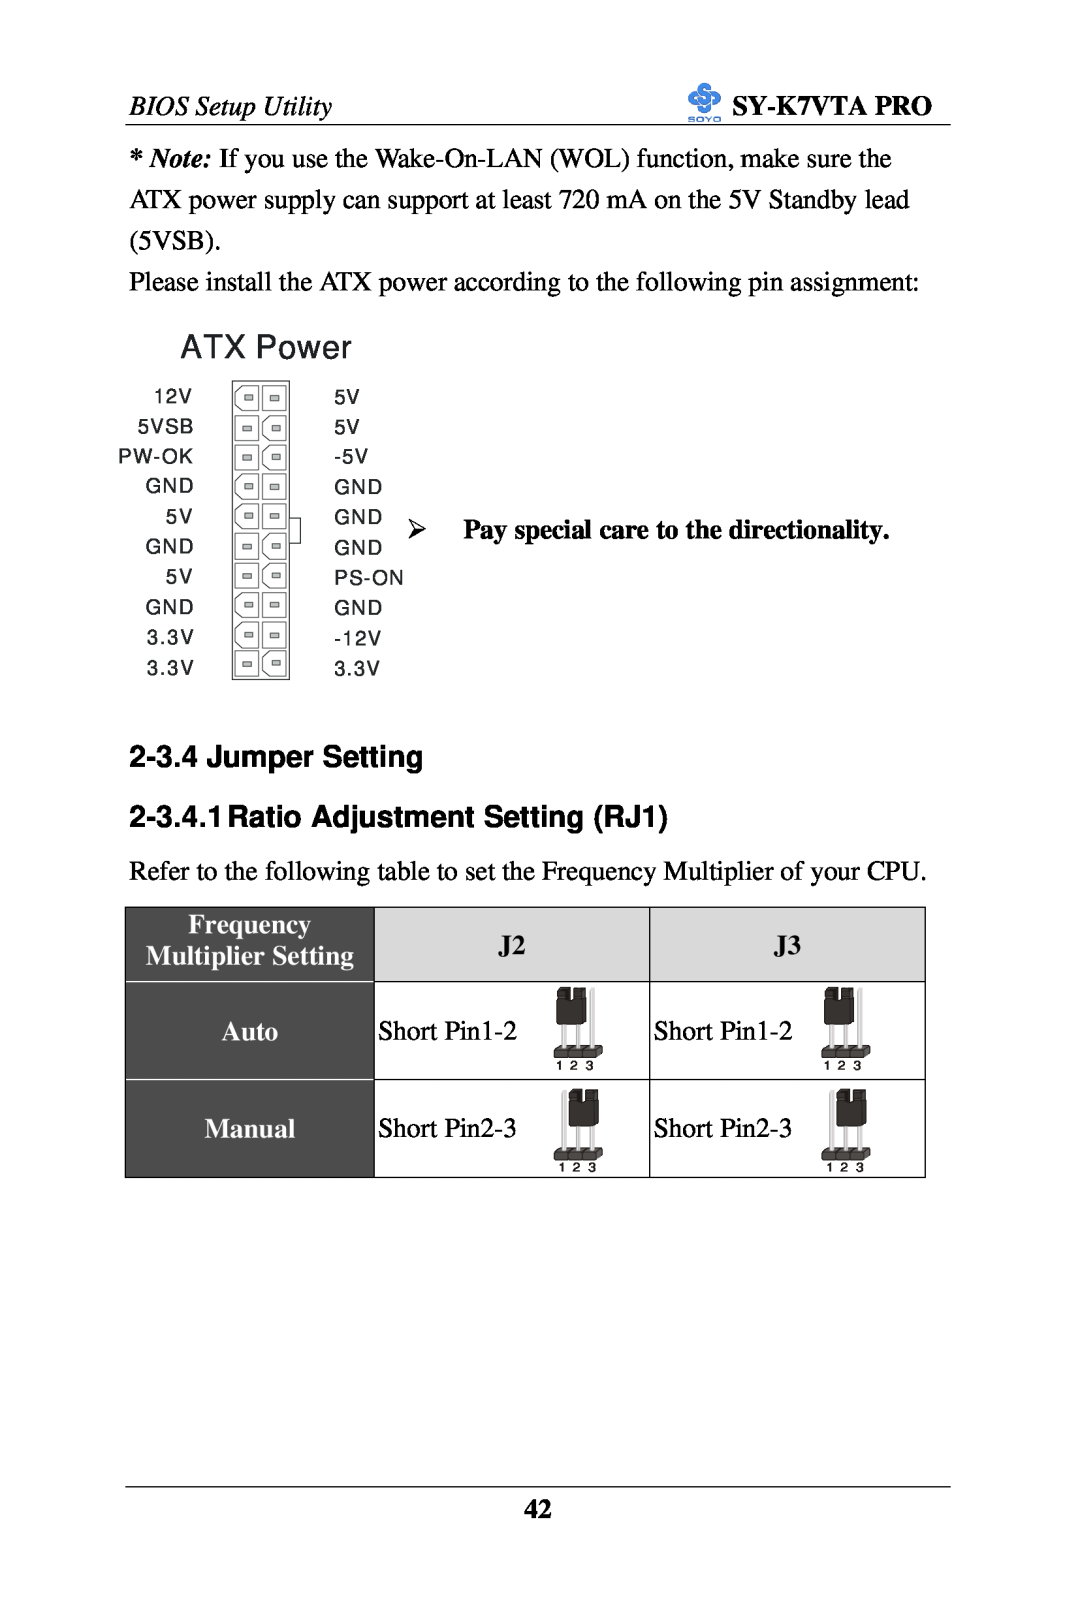 SOYO SY-K7VTA PRO Jumper Setting 2-3.4.1 Ratio Adjustment Setting RJ1, Frequency Multiplier Setting, Auto, Manual 